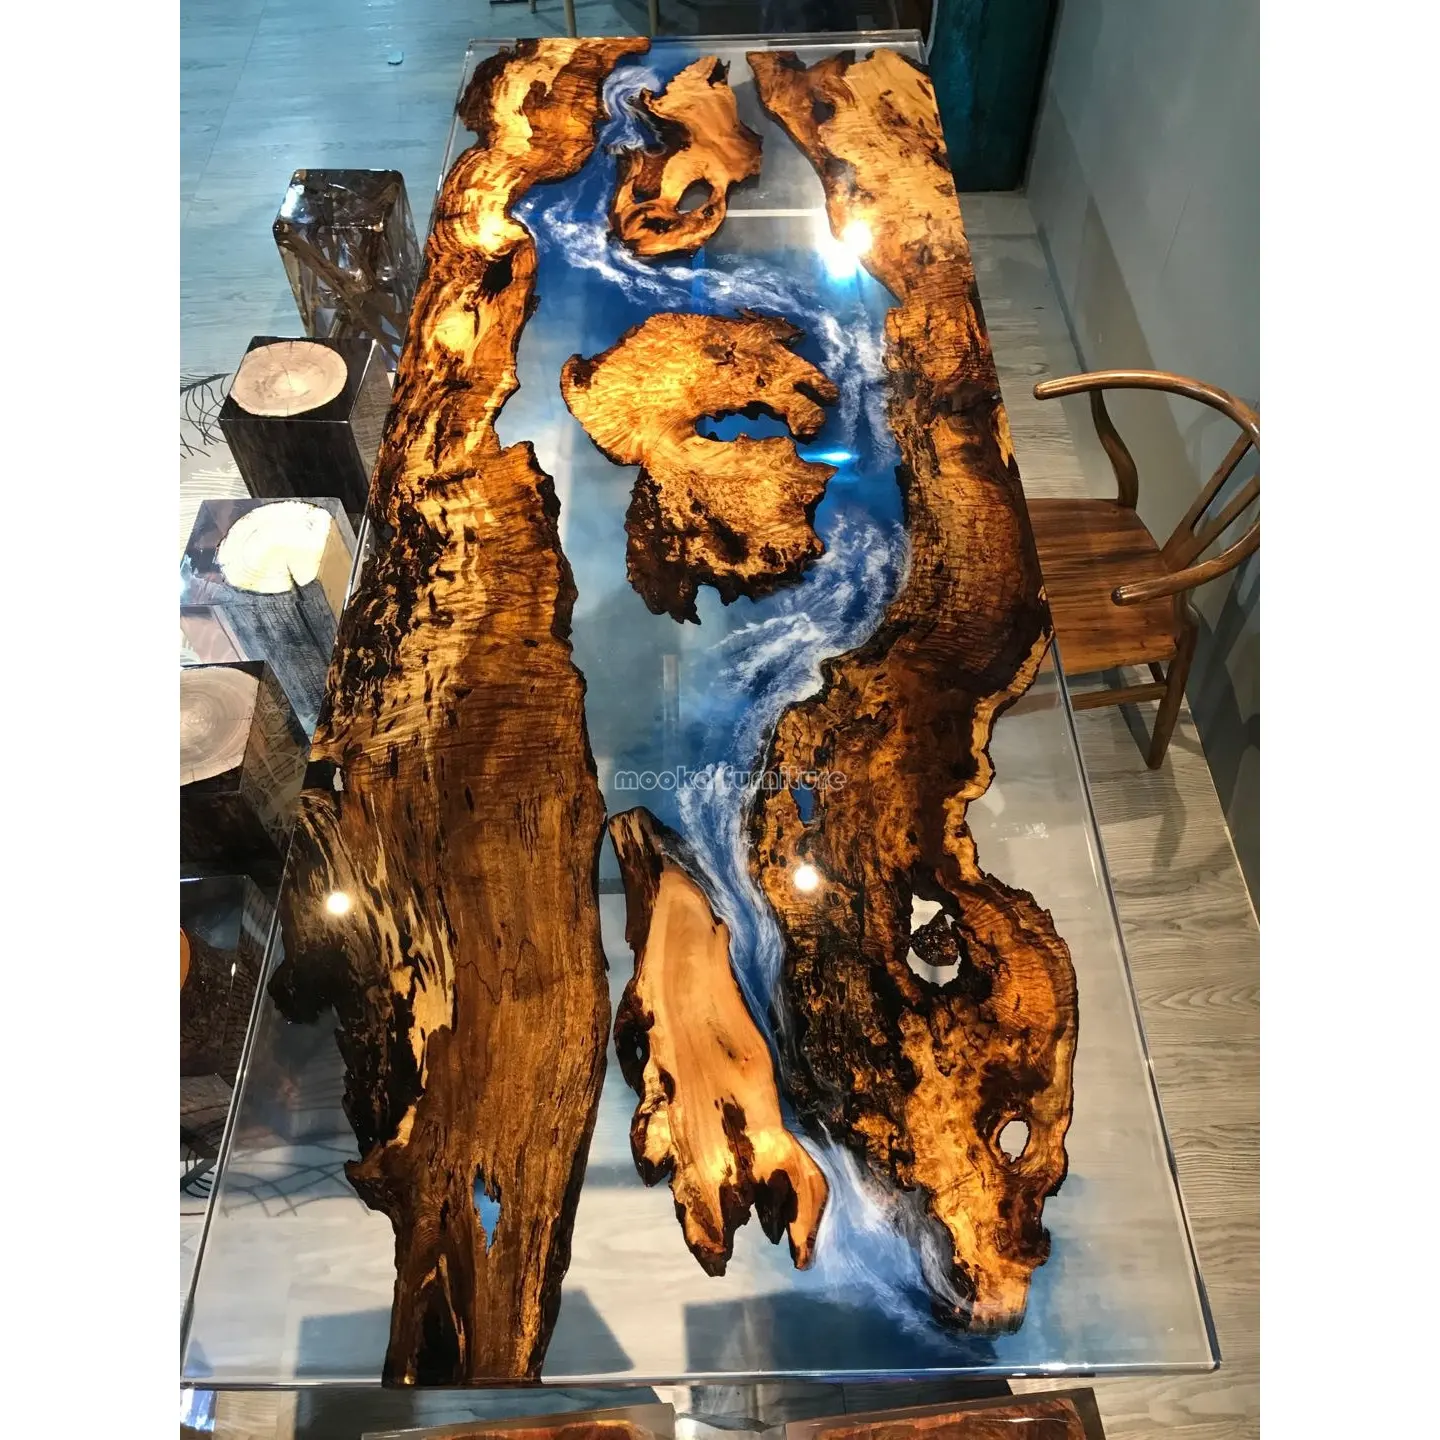 Casa inteira incrível personalizada mesa de resina de madeira sólida, alta qualidade de resina de resina epóxi do rio único mesa de jantar